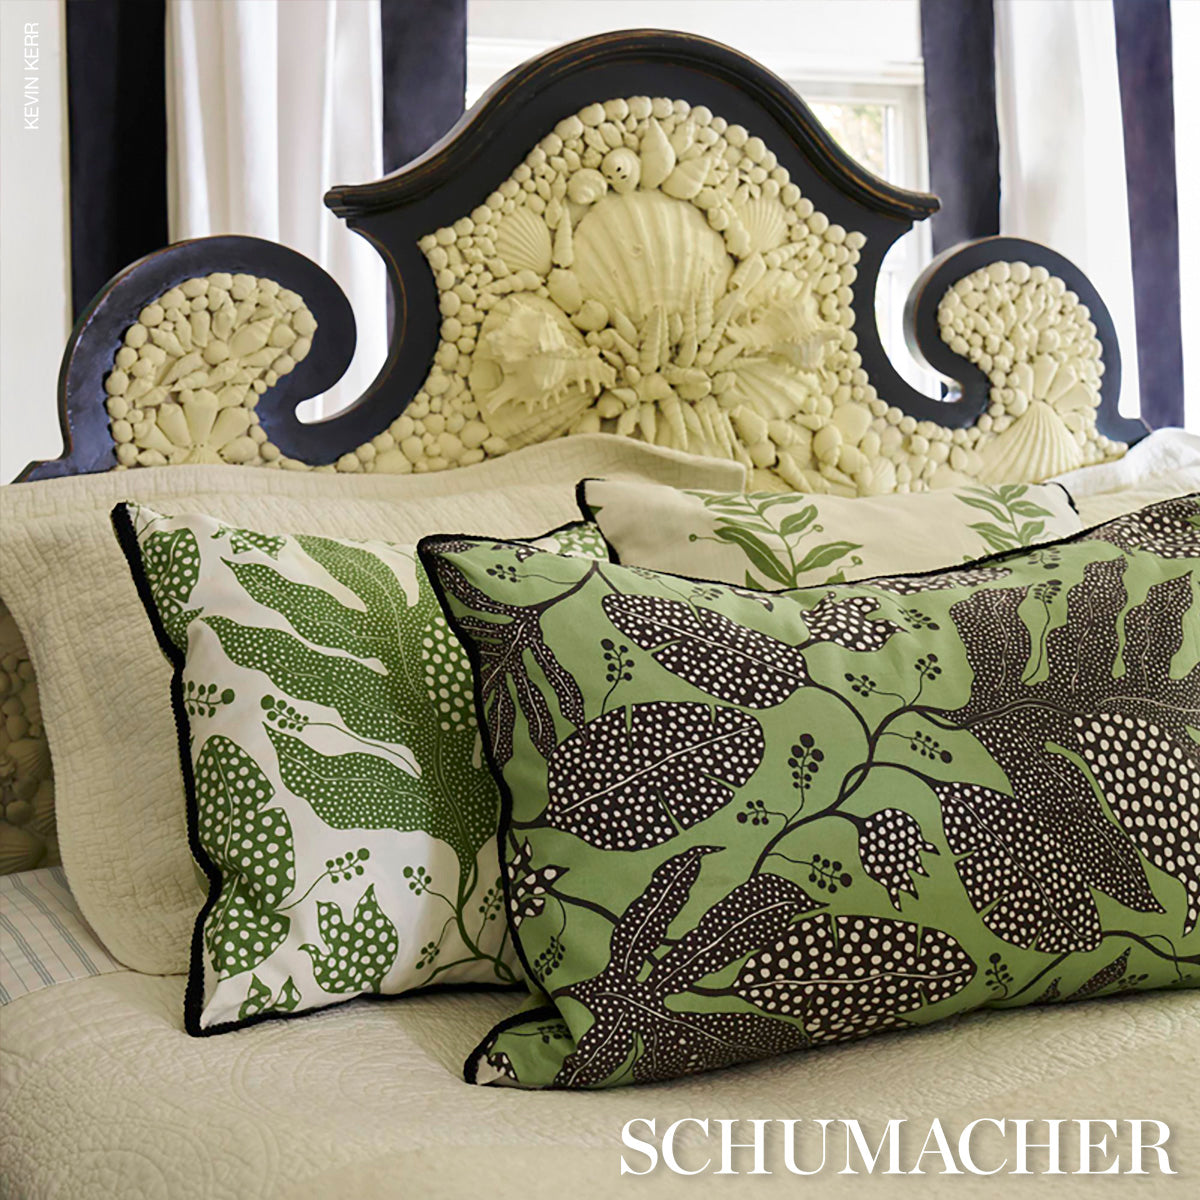 Purchase 181652 | Polka Dot Jungle, Green & Ivory - Schumacher Fabric